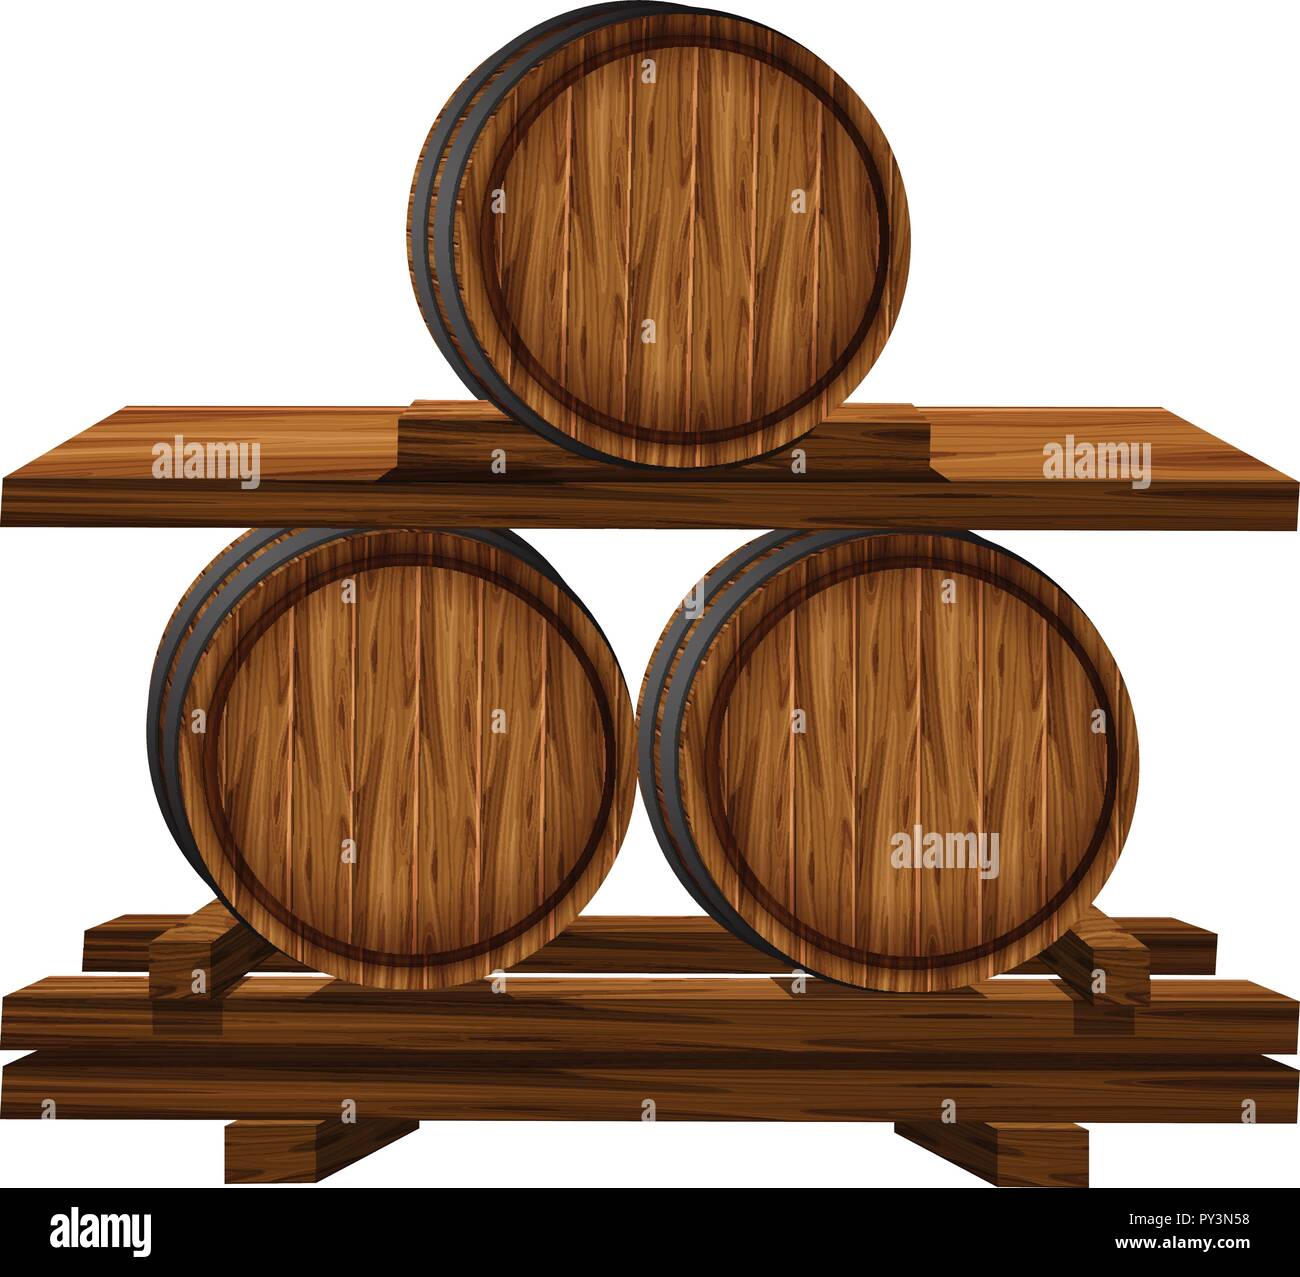 Three stacked wooden barrells illustration Stock Vector